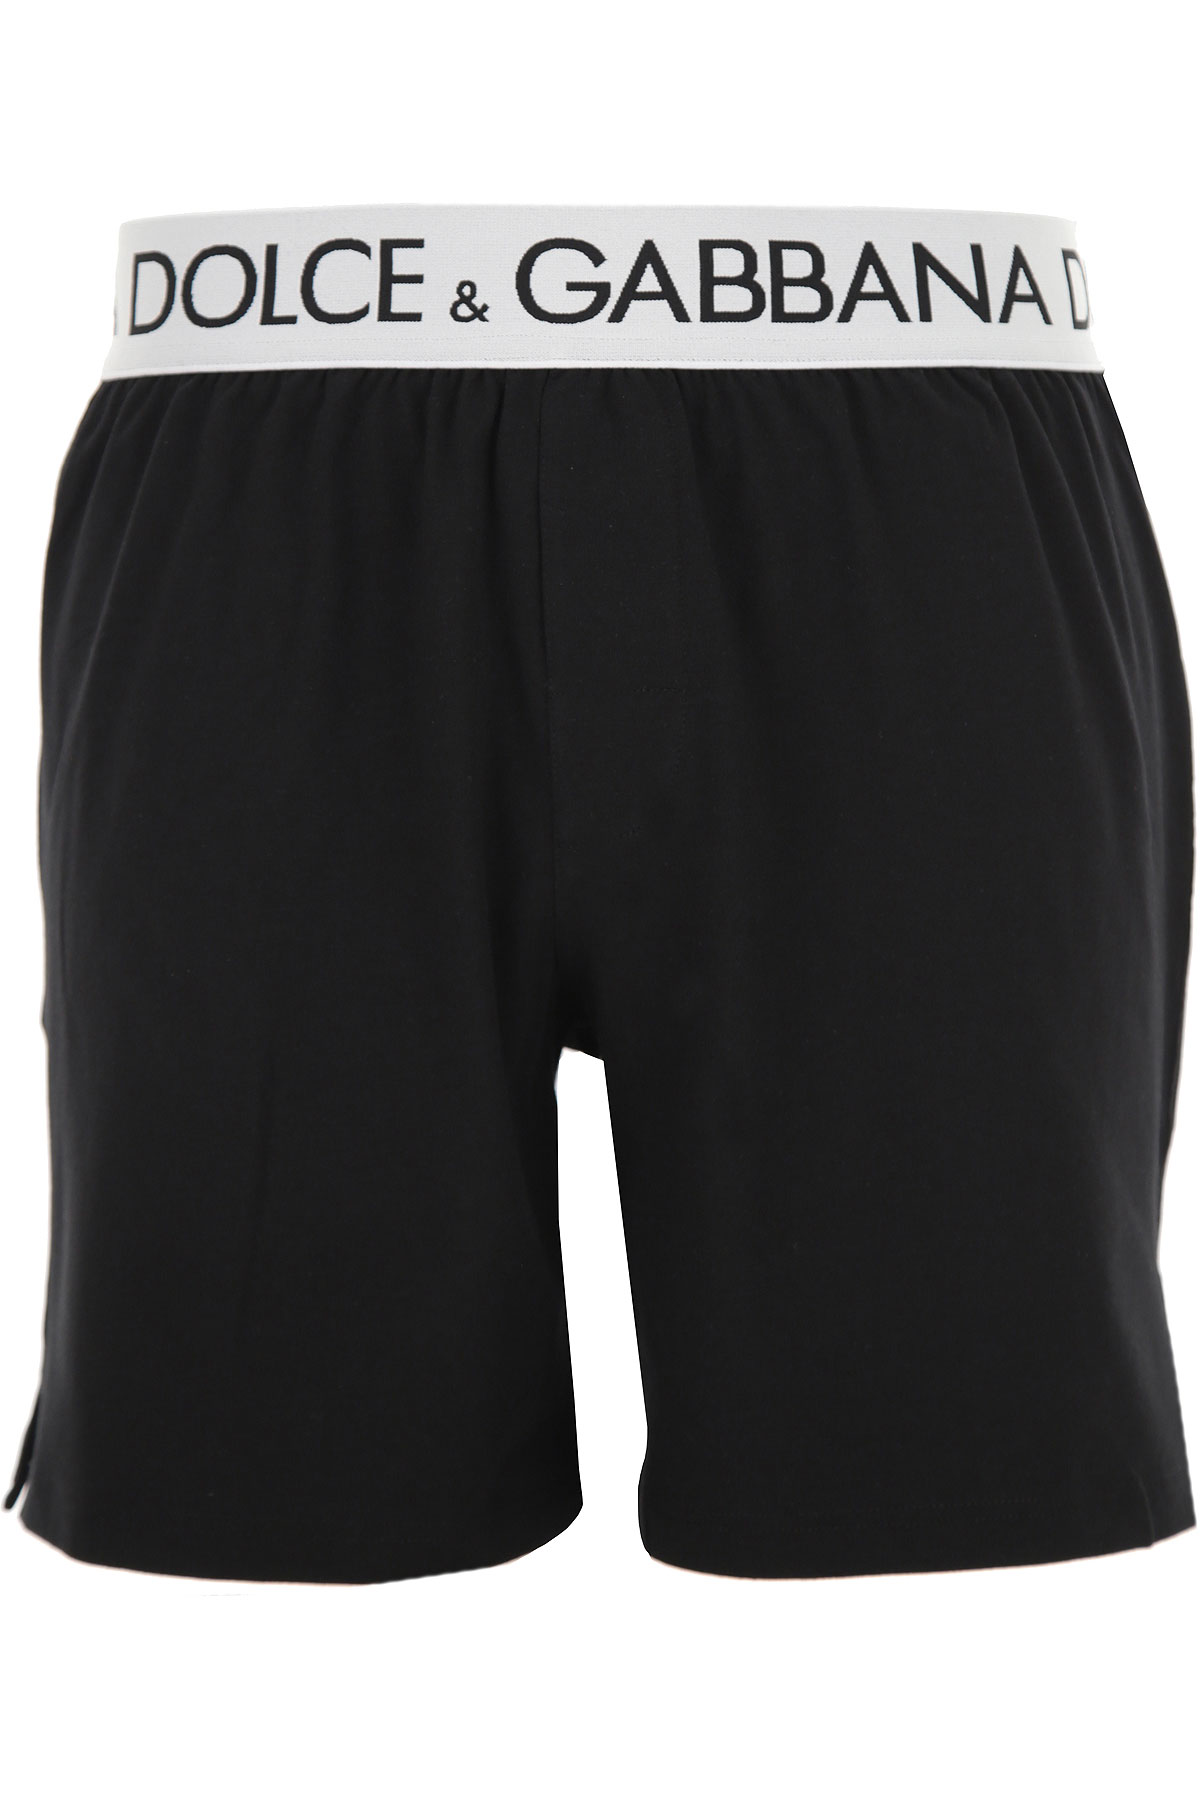 Mens Underwear Dolce & Gabbana, Style code: m4b99j-0uaig-n0000